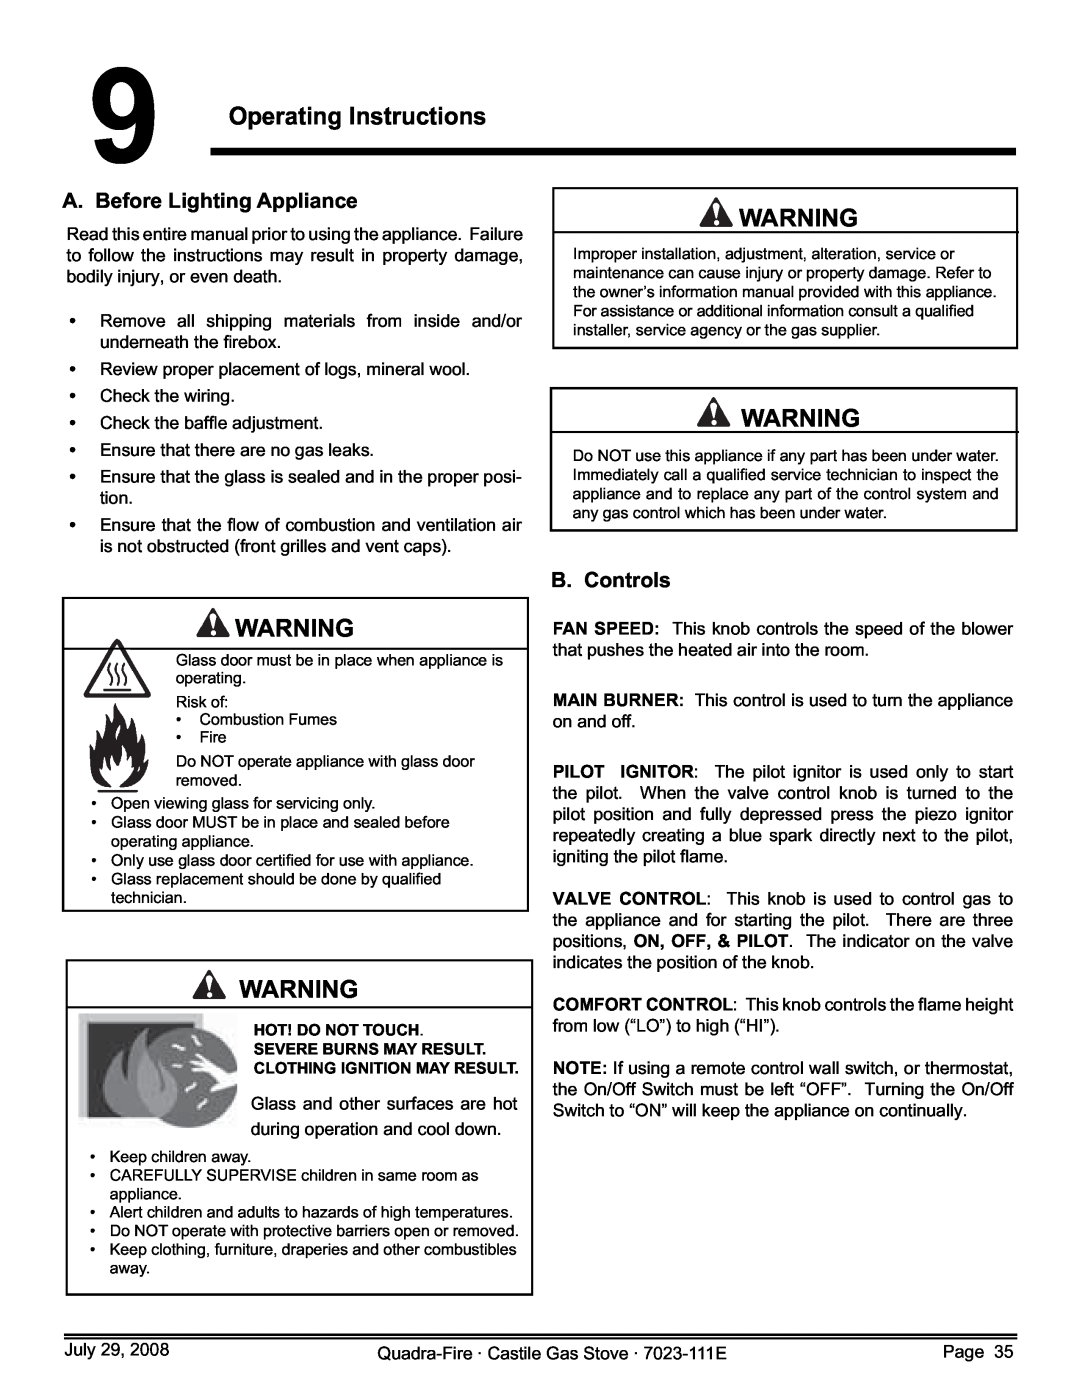 Quadra-Fire CASTILE-GAS-PMH, CASTILE-GAS-MBK, 7023-111E 9Operating Instructions, A. Before Lighting Appliance, B. Controls 